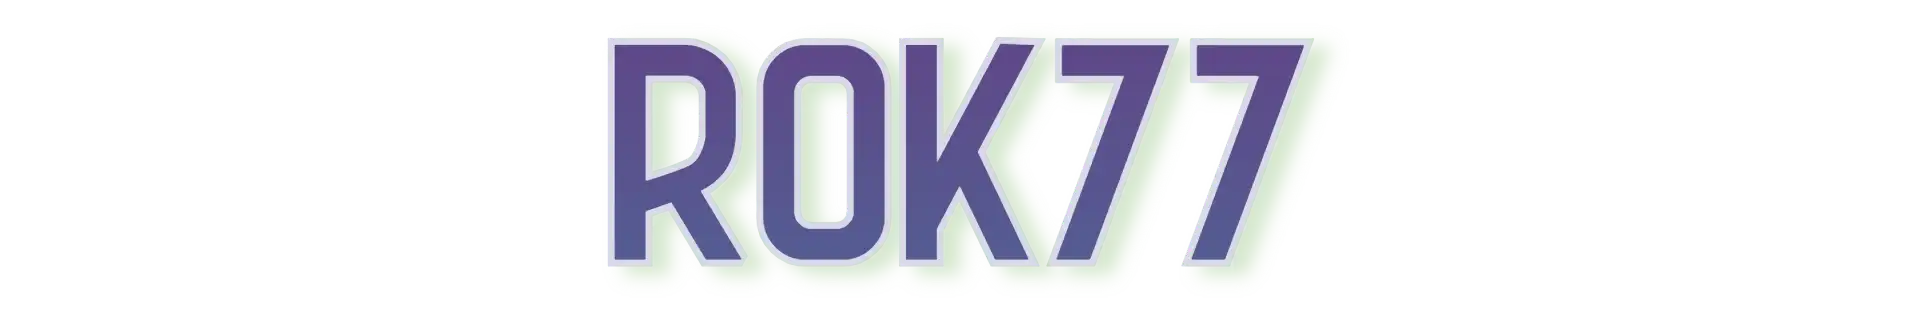 ROK77